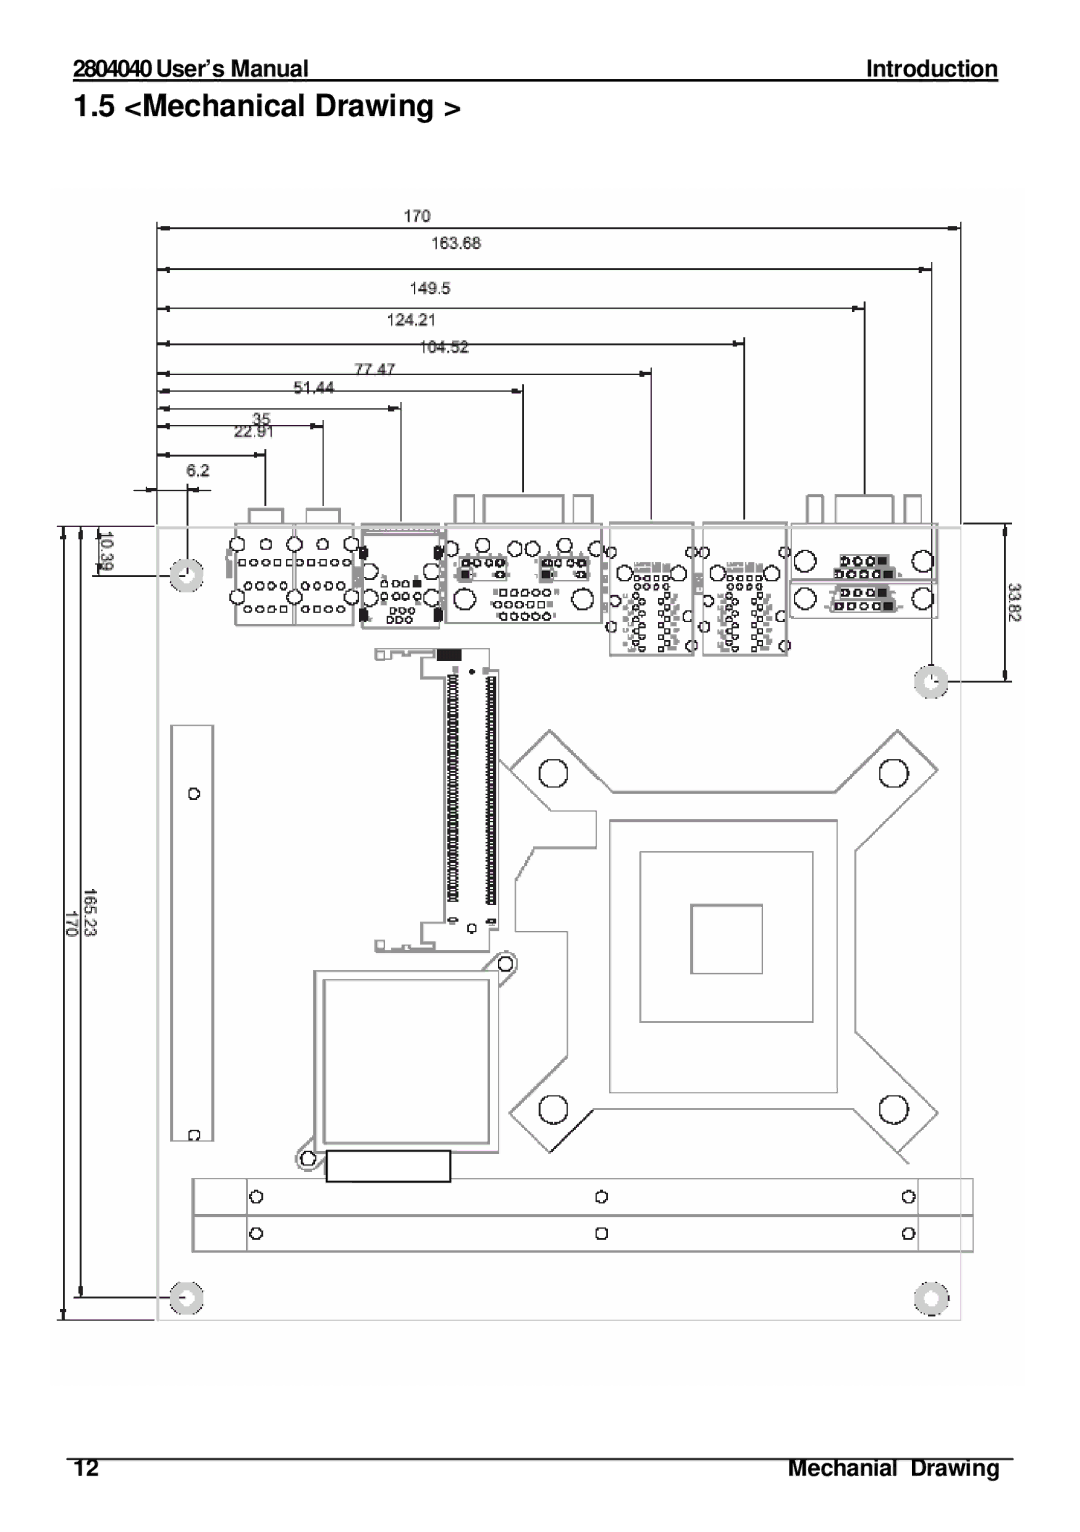 Intel 2804040 user manual Mechanical Drawing, Mechanial Drawing 